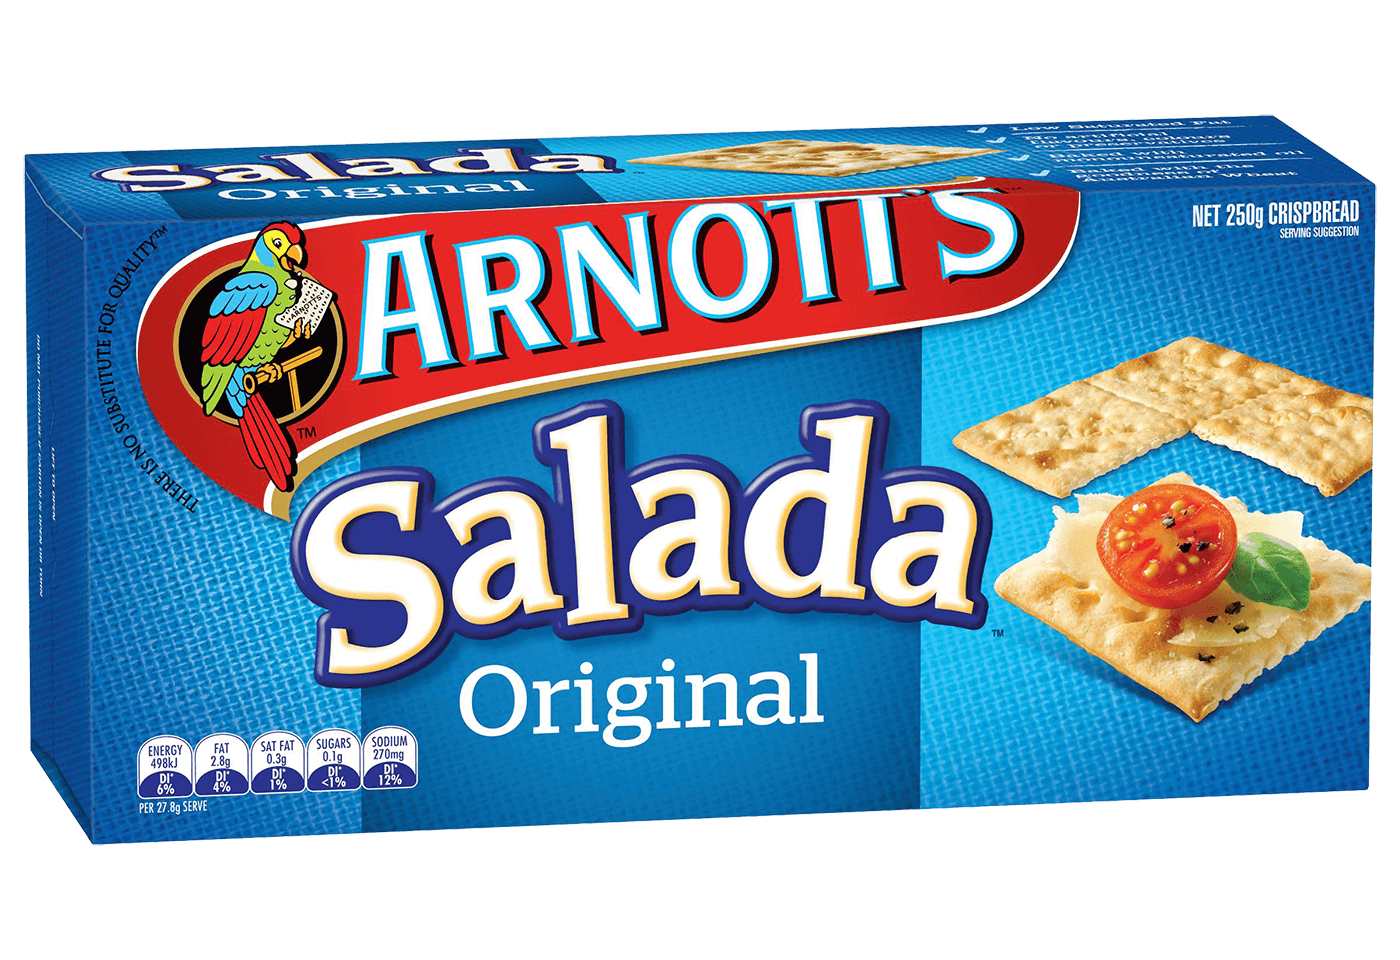 Arnotts Salada Original